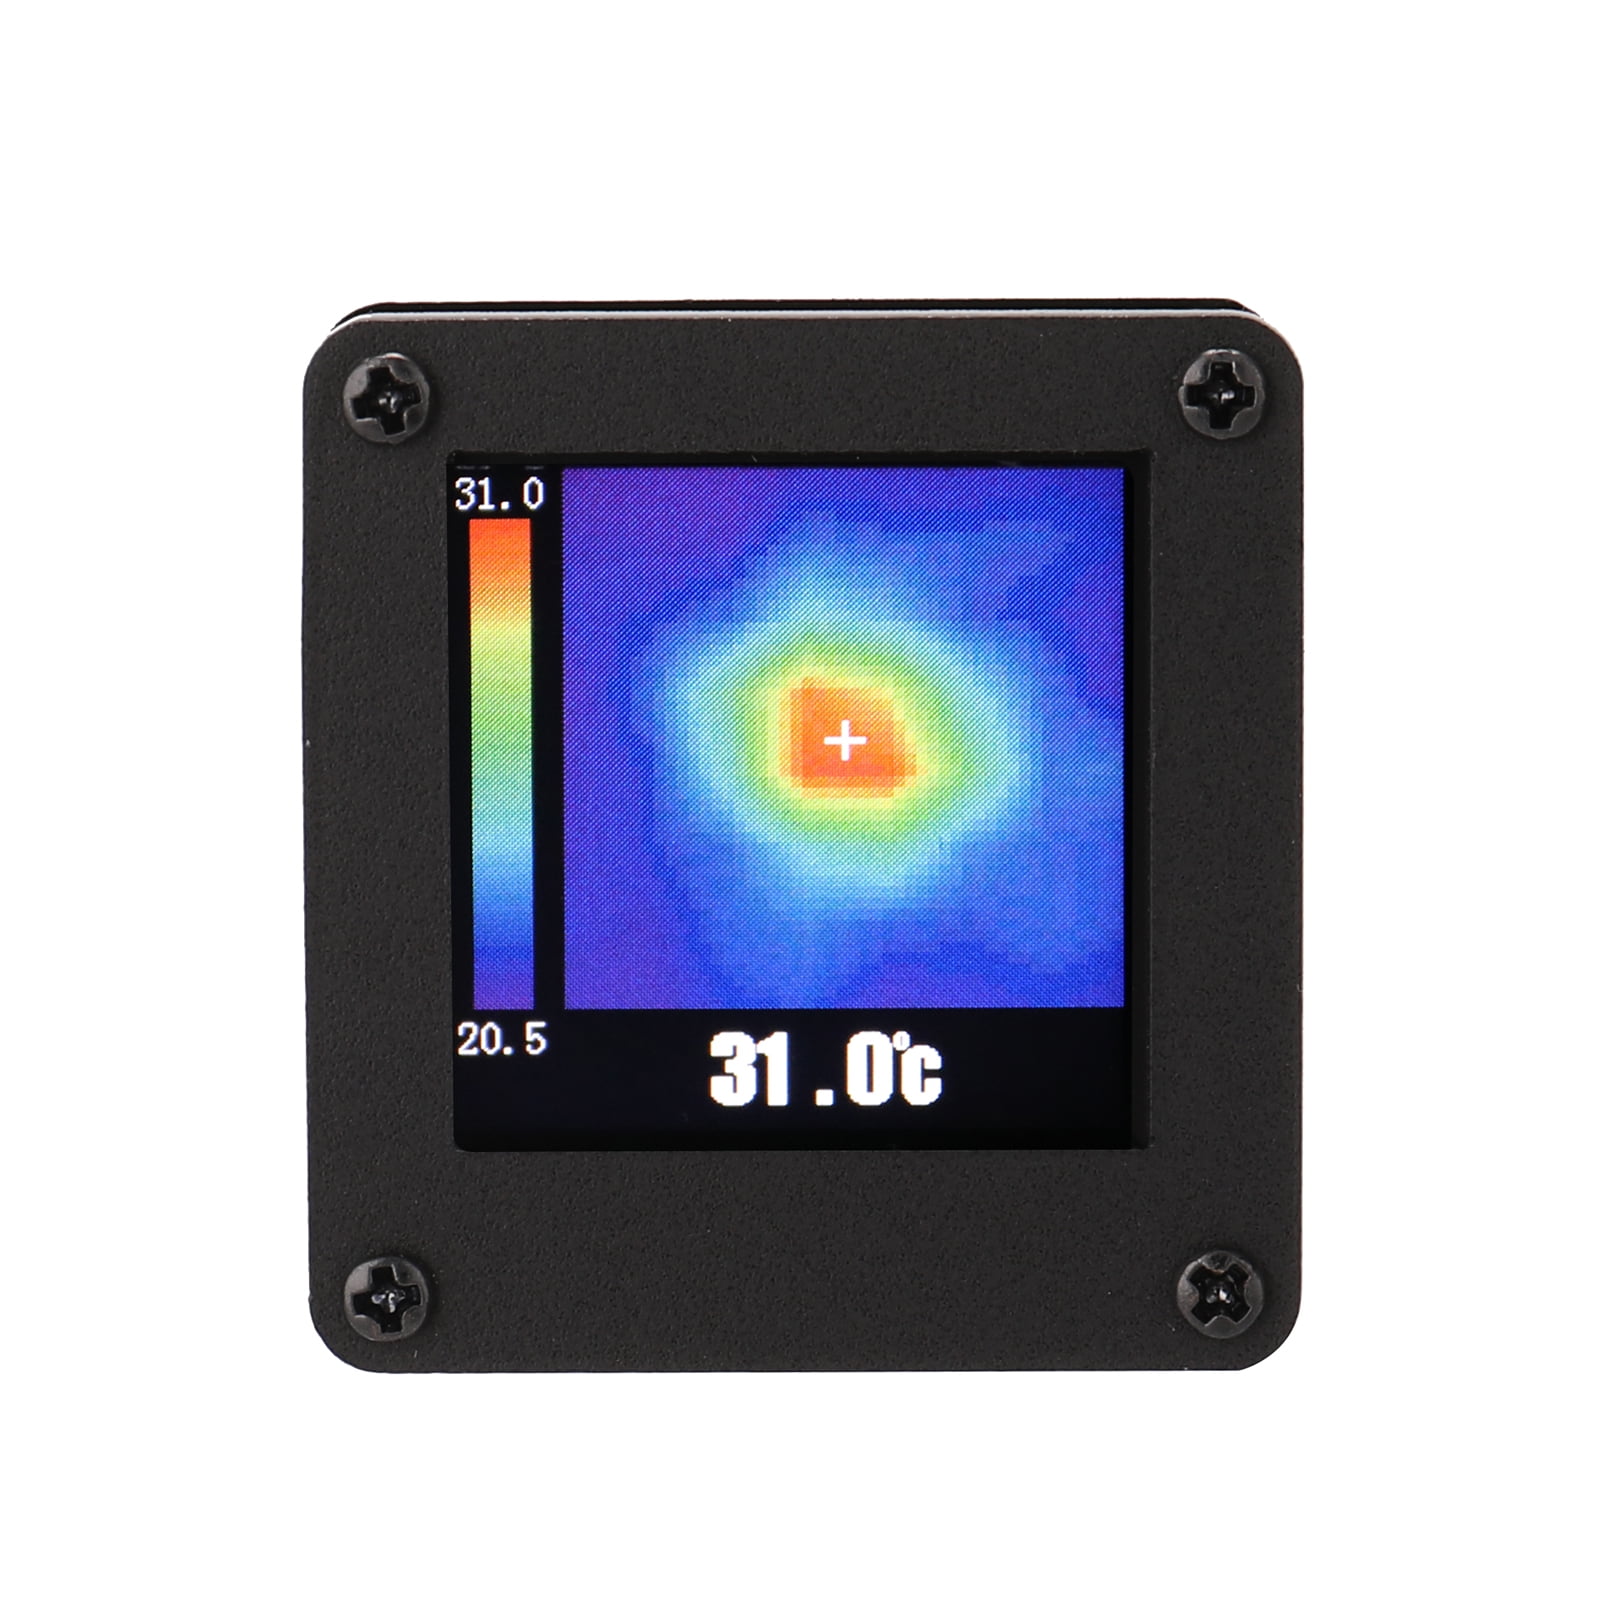 Pocket Infrared Thermal Imager AMG8833 8x8 7m/23ft Farthest Detection Distance 